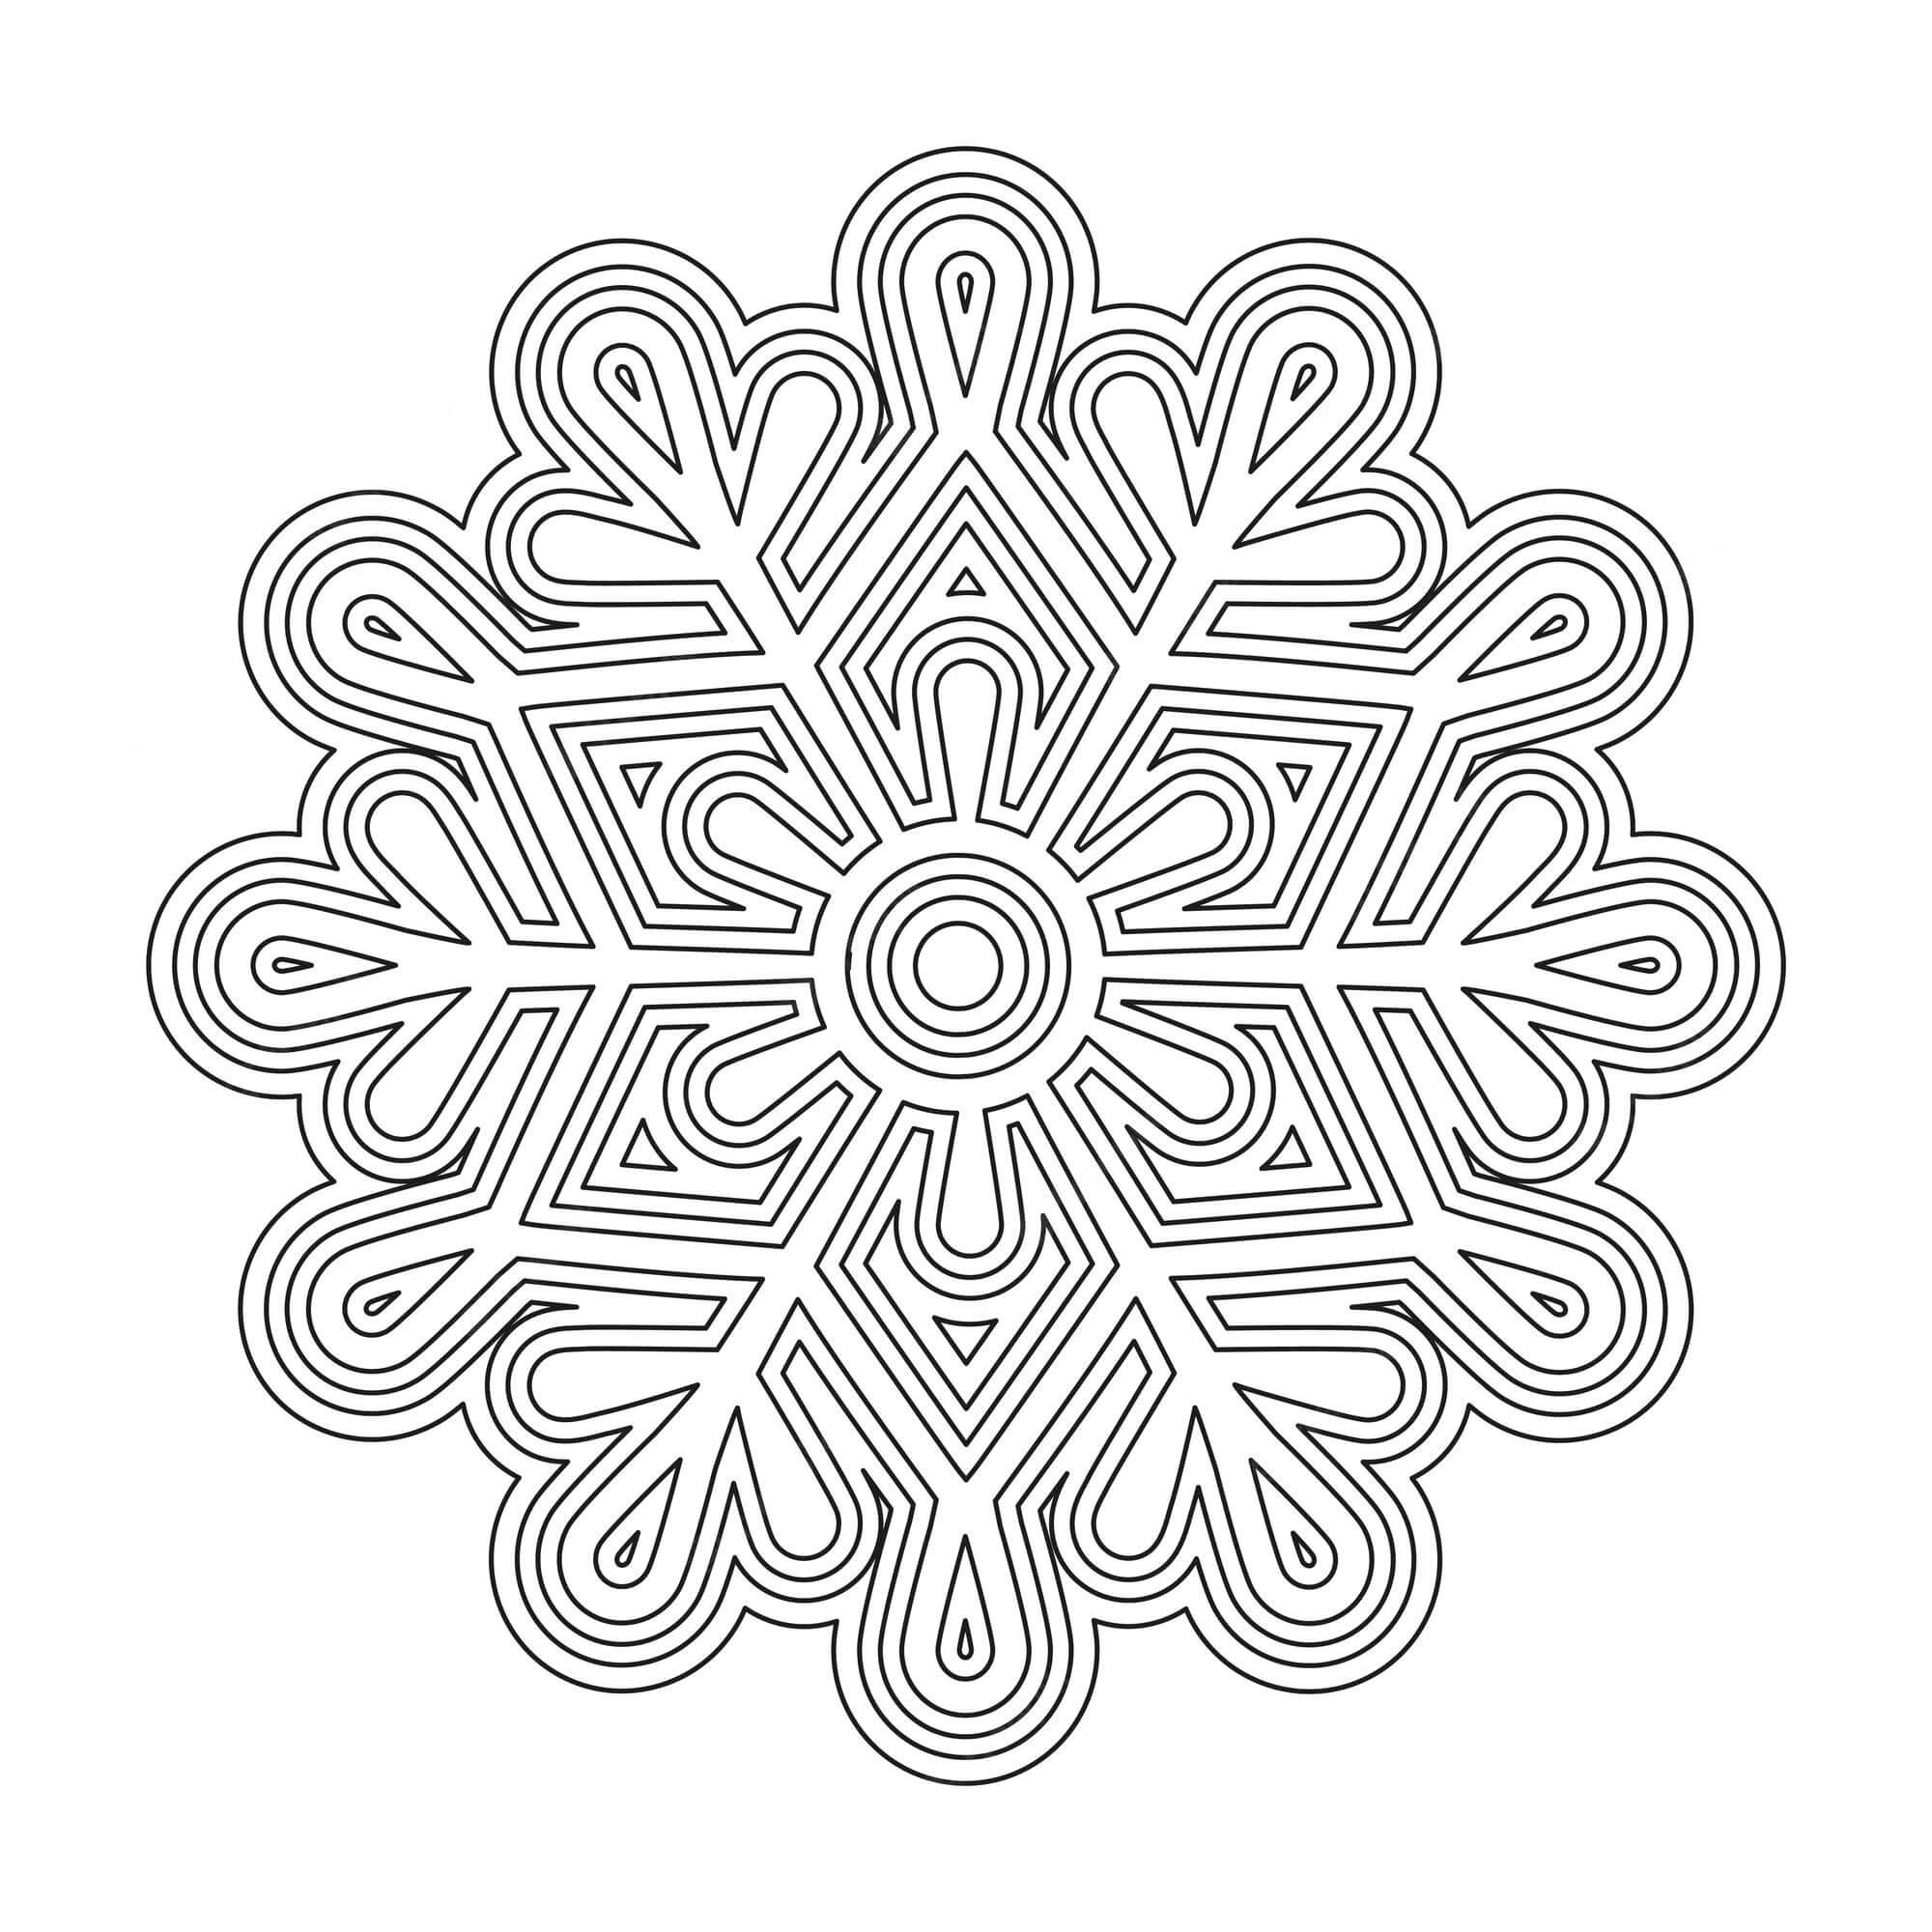 Mandala Winter Coloring Page - Sheet 8 Mandalas